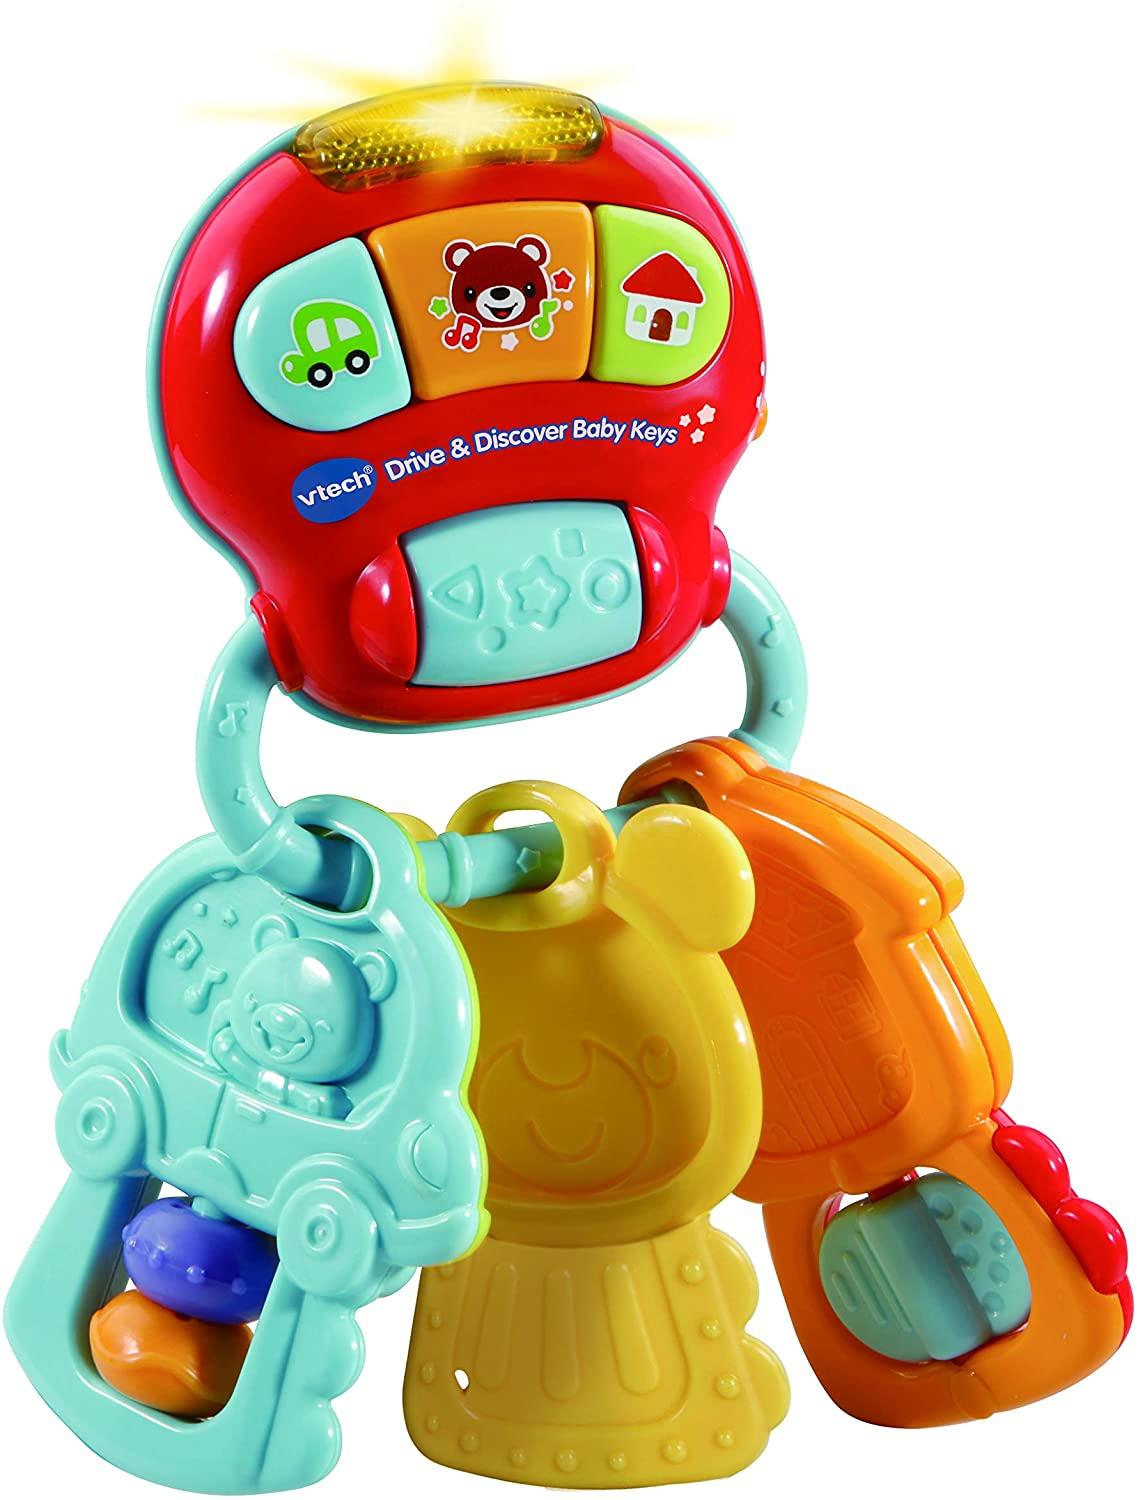 Vtech Drive And Discover Baby Keys Toymaster Ballina